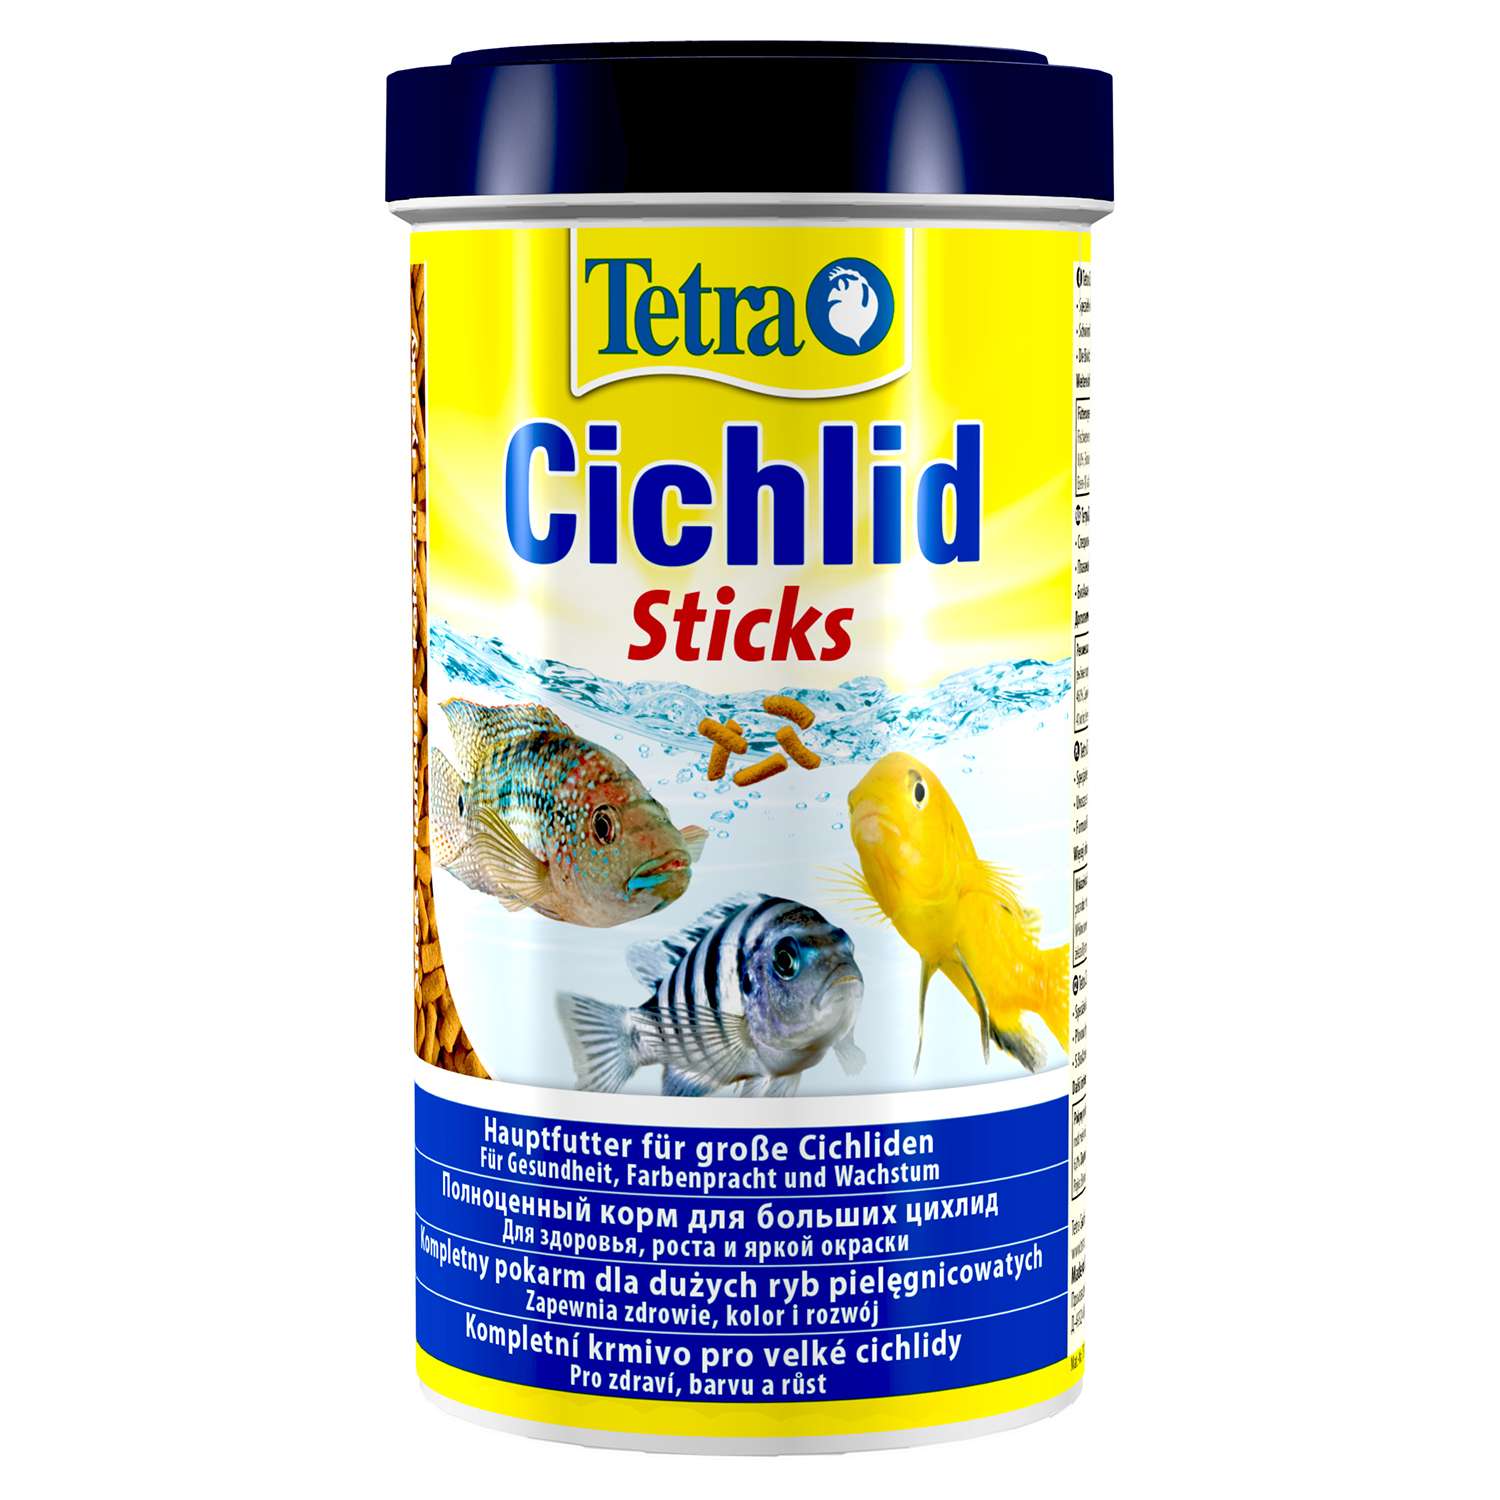 Корм для рыб Tetra Cichlid Sticks всех видов цихлид в палочках 500мл - фото 2